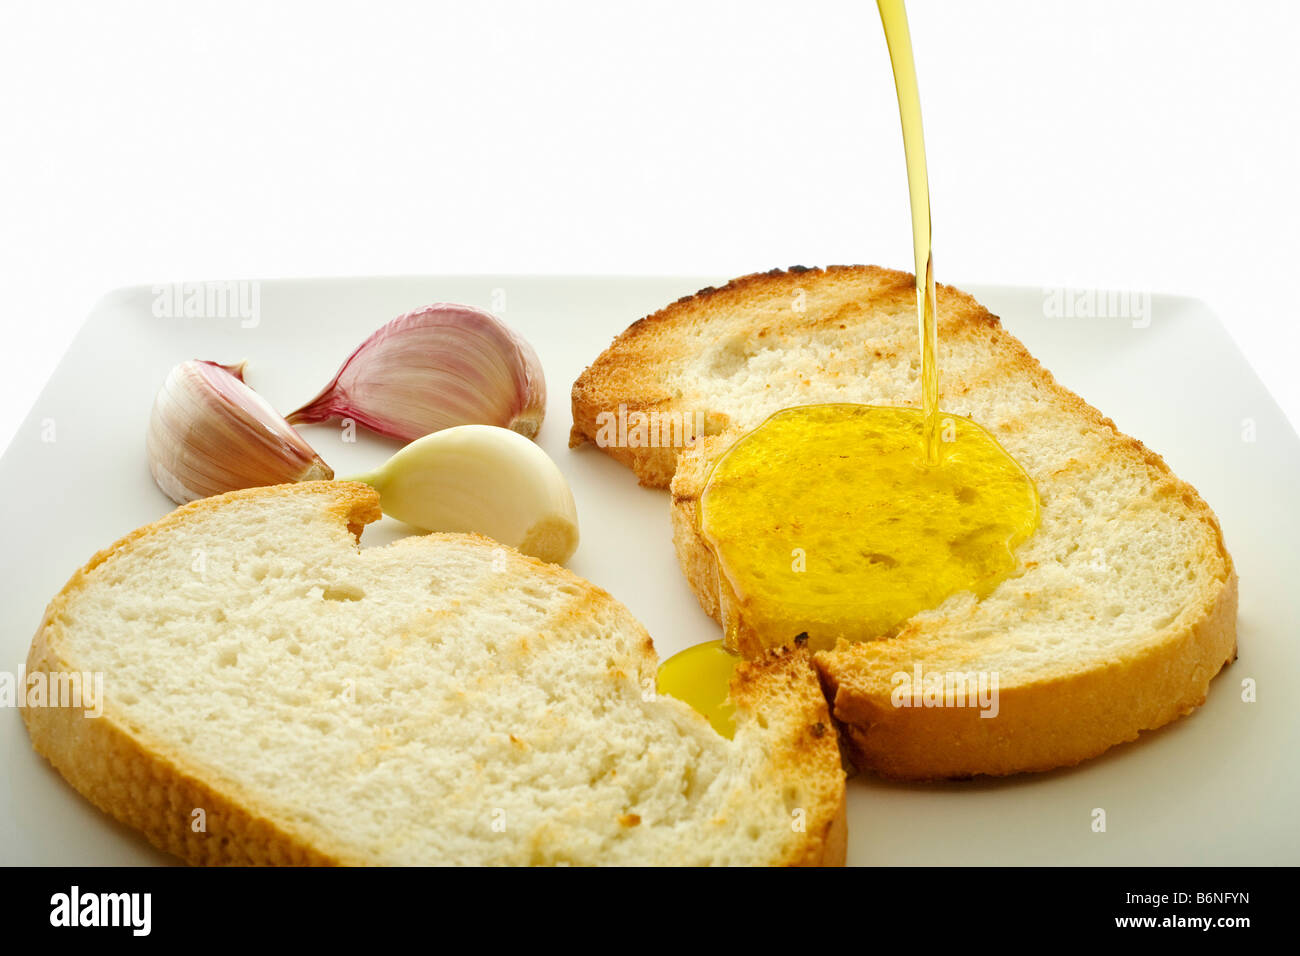 aceite de oliva virgen extra con pan y ajos Extra virgin olive oil with bread and garlic Stock Photo